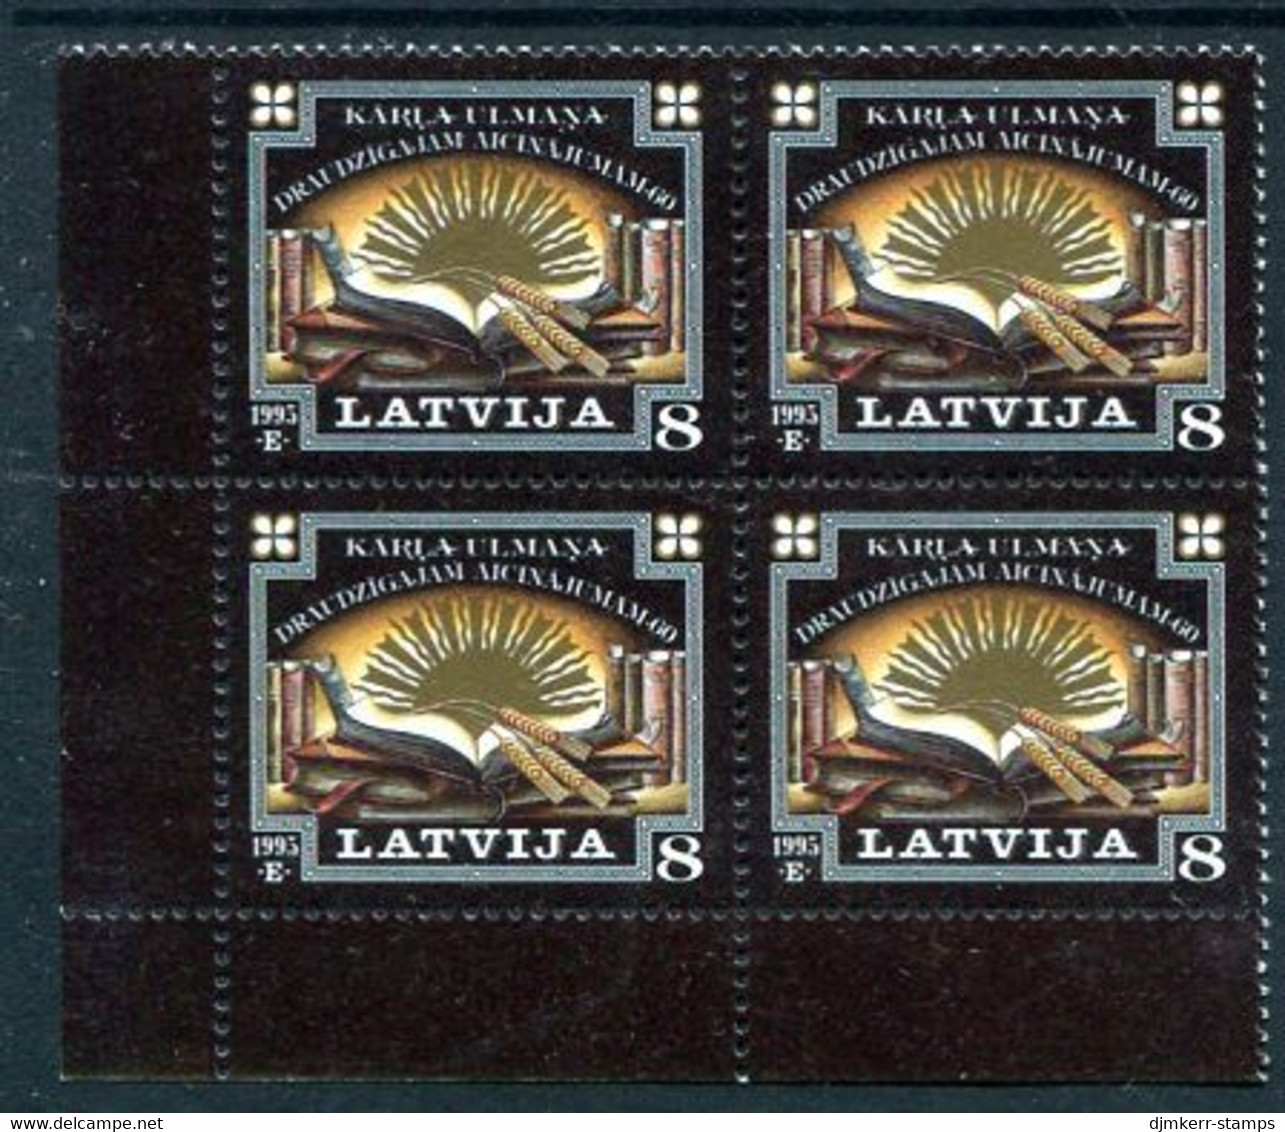 LATVIA 1995 Schools Appeal Block Of 4 MNH / **.  Michel 409 - Lettland